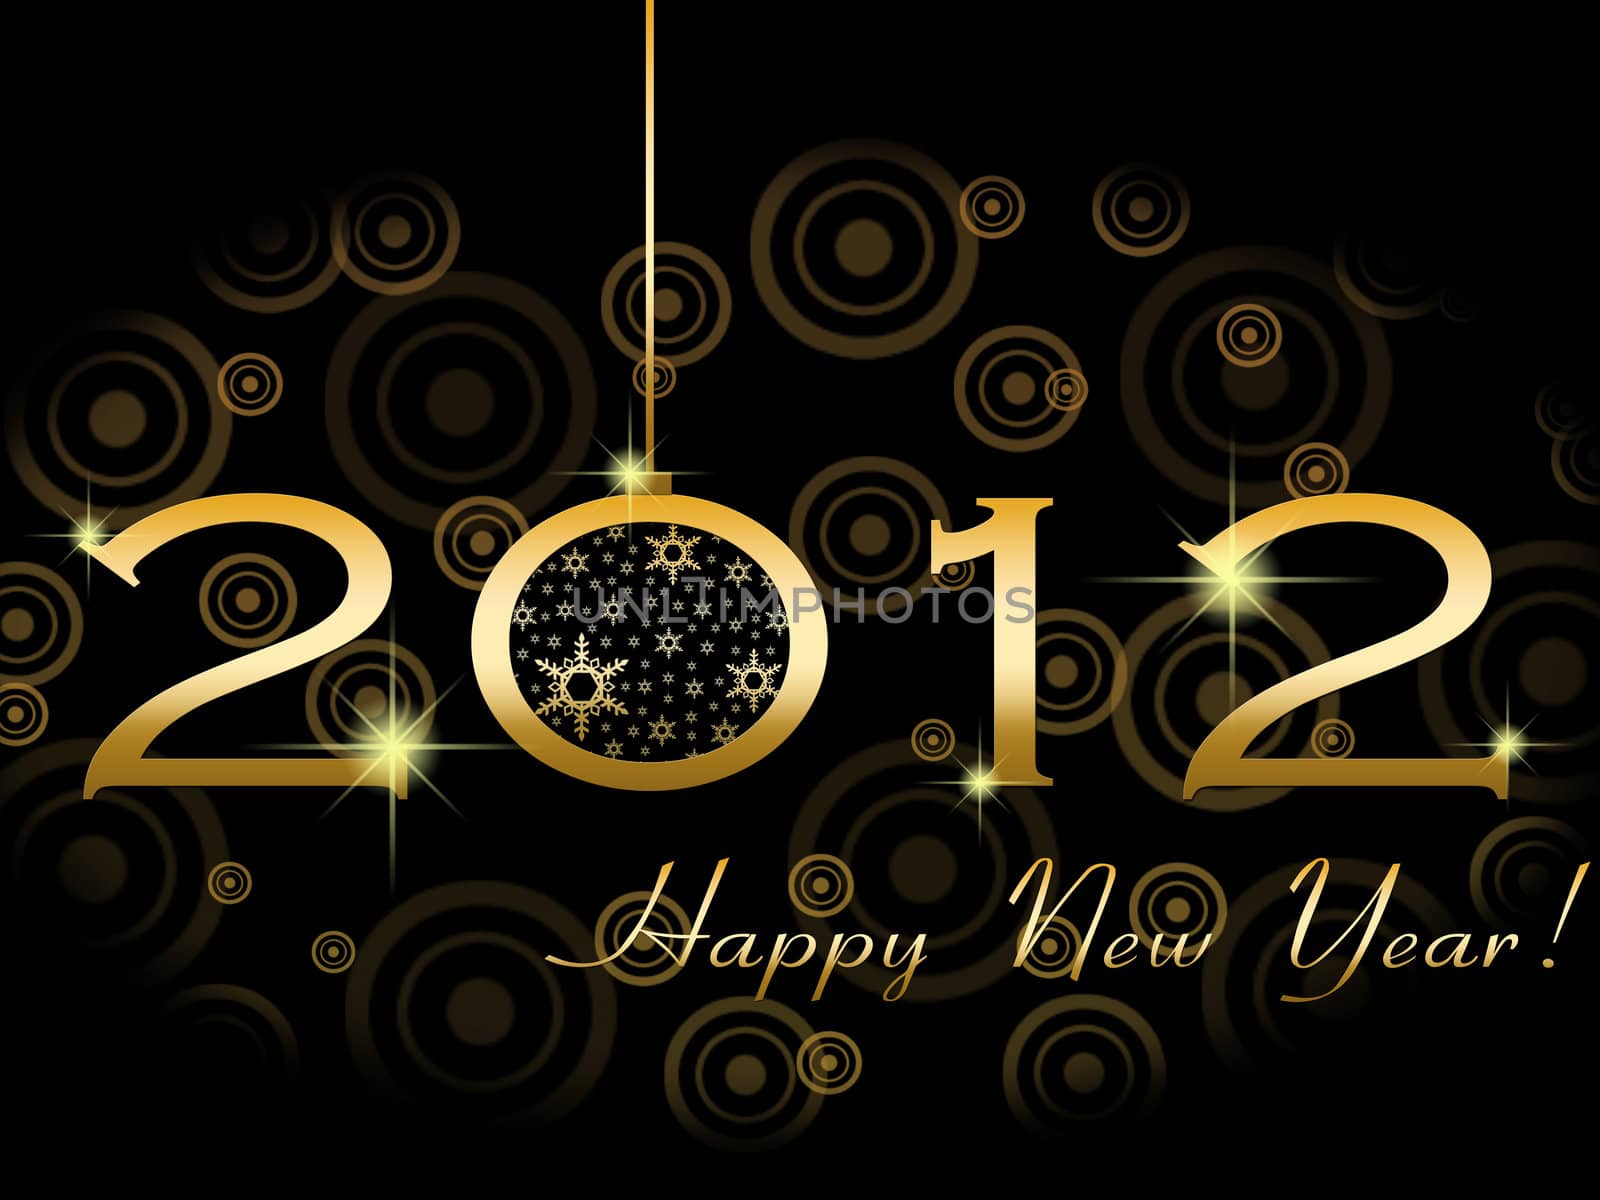 Happy new year 2012 by alena0509